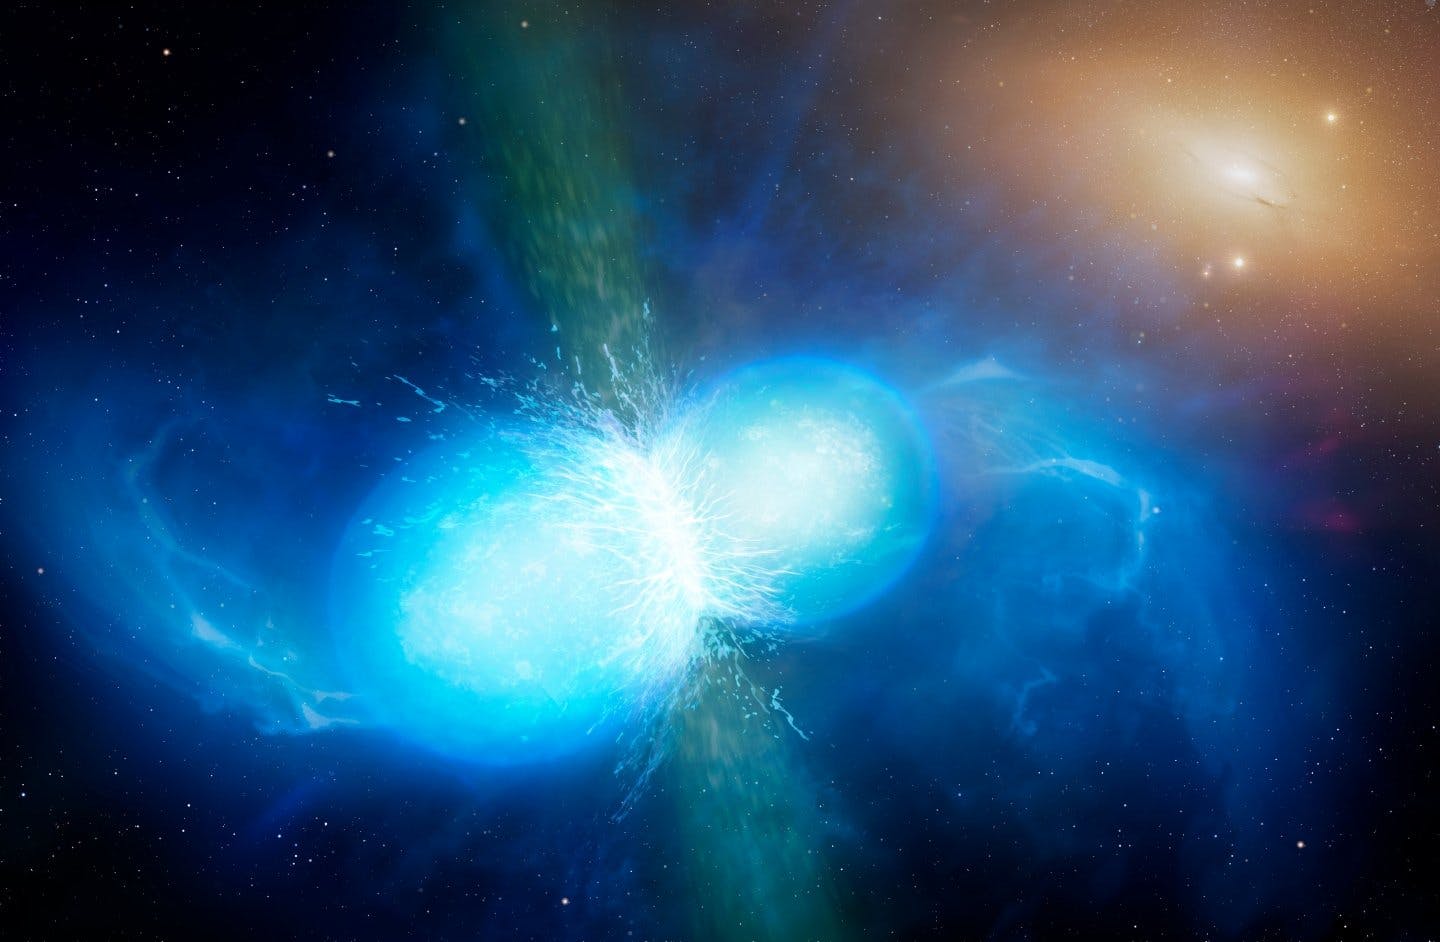 Gravitational Waves Were Used To Look Inside Neutron Stars